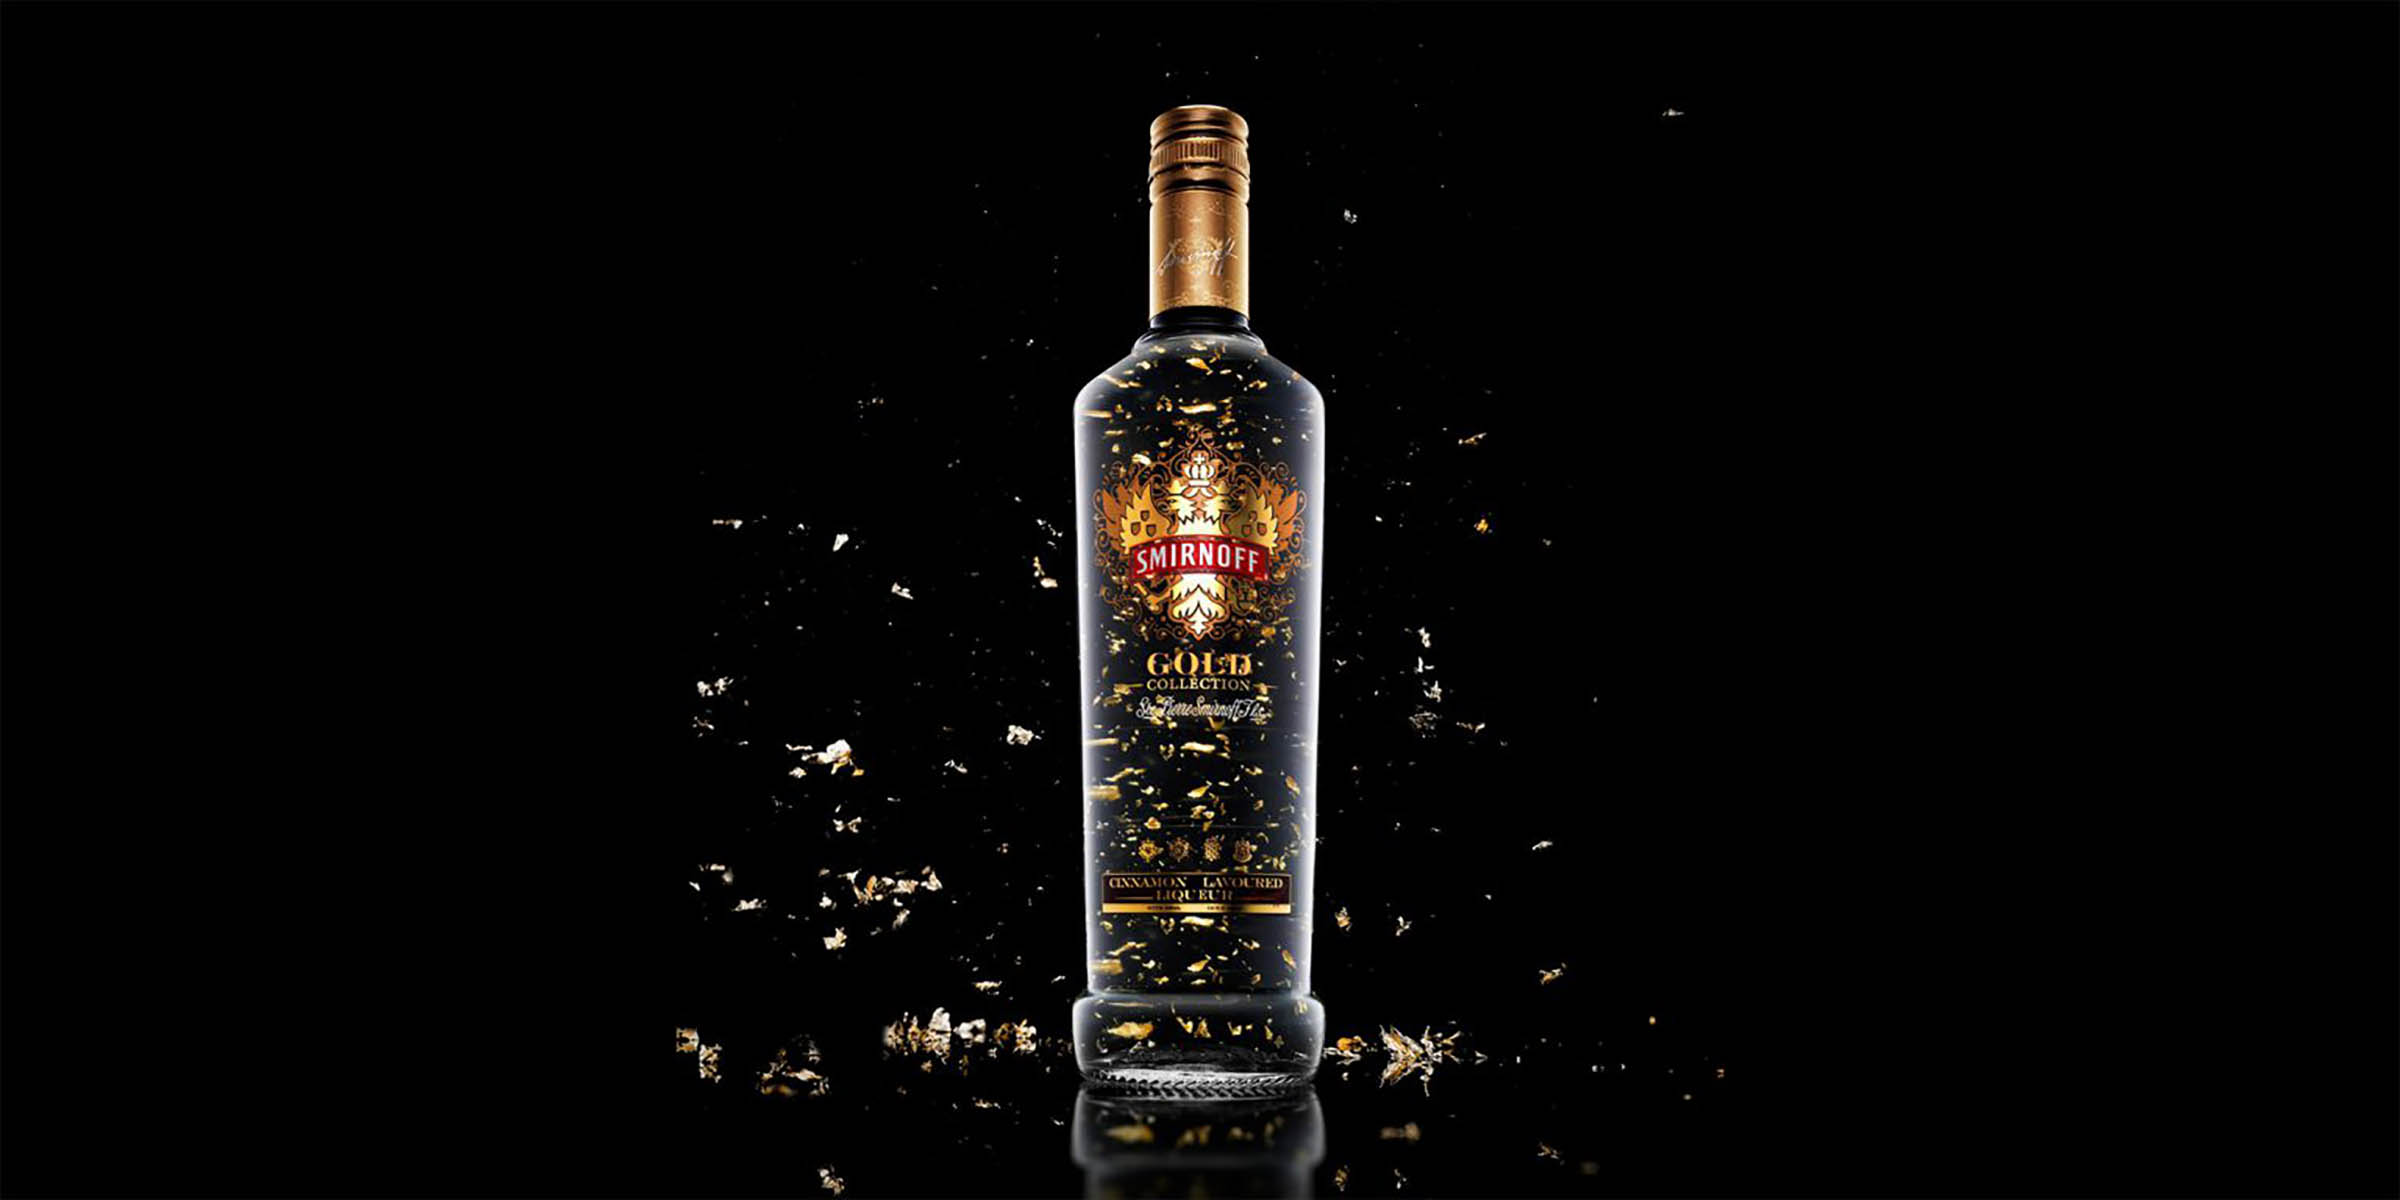 https://cdn.luxe.digital/media/20230118142742/smirnoff-vodka-bottle-price-size-review-luxe-digital-1.jpg